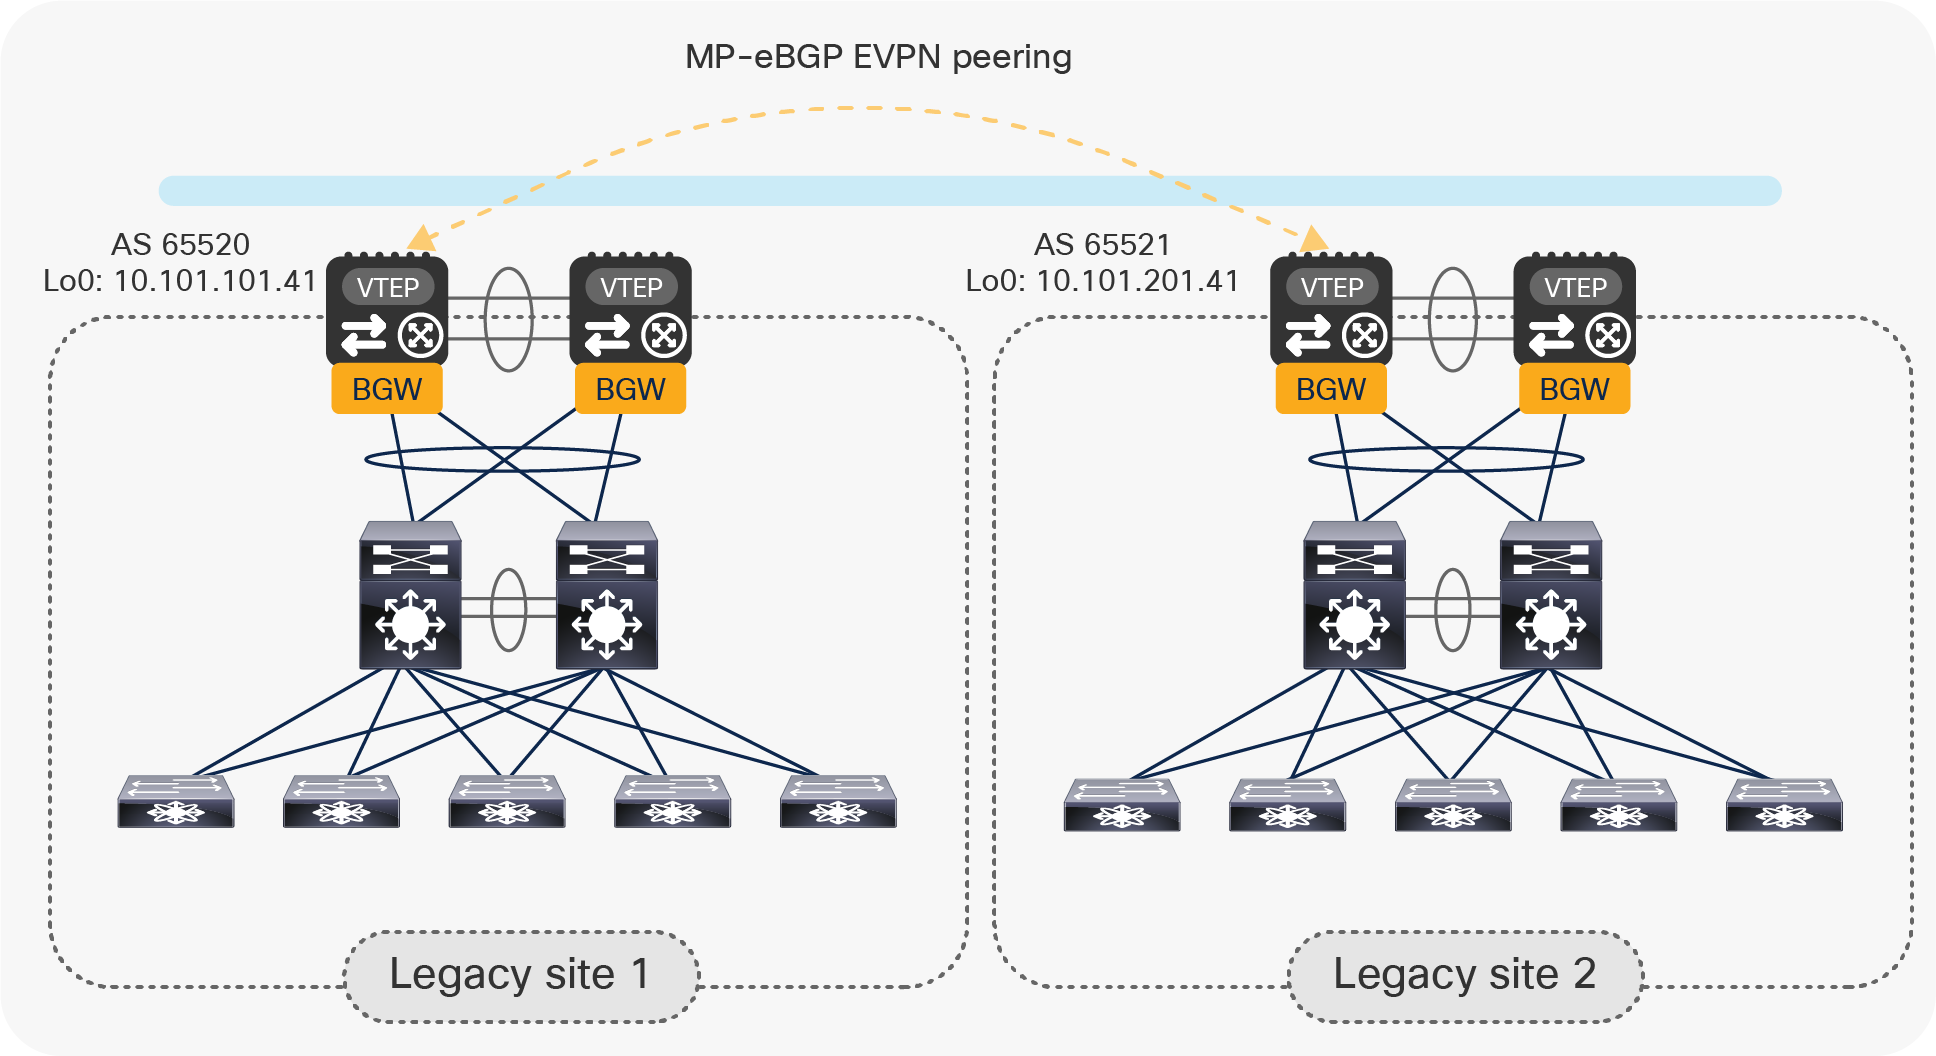 Establishment of MP-eBGP EVPN peering between vPC BGW nodes in separate sites